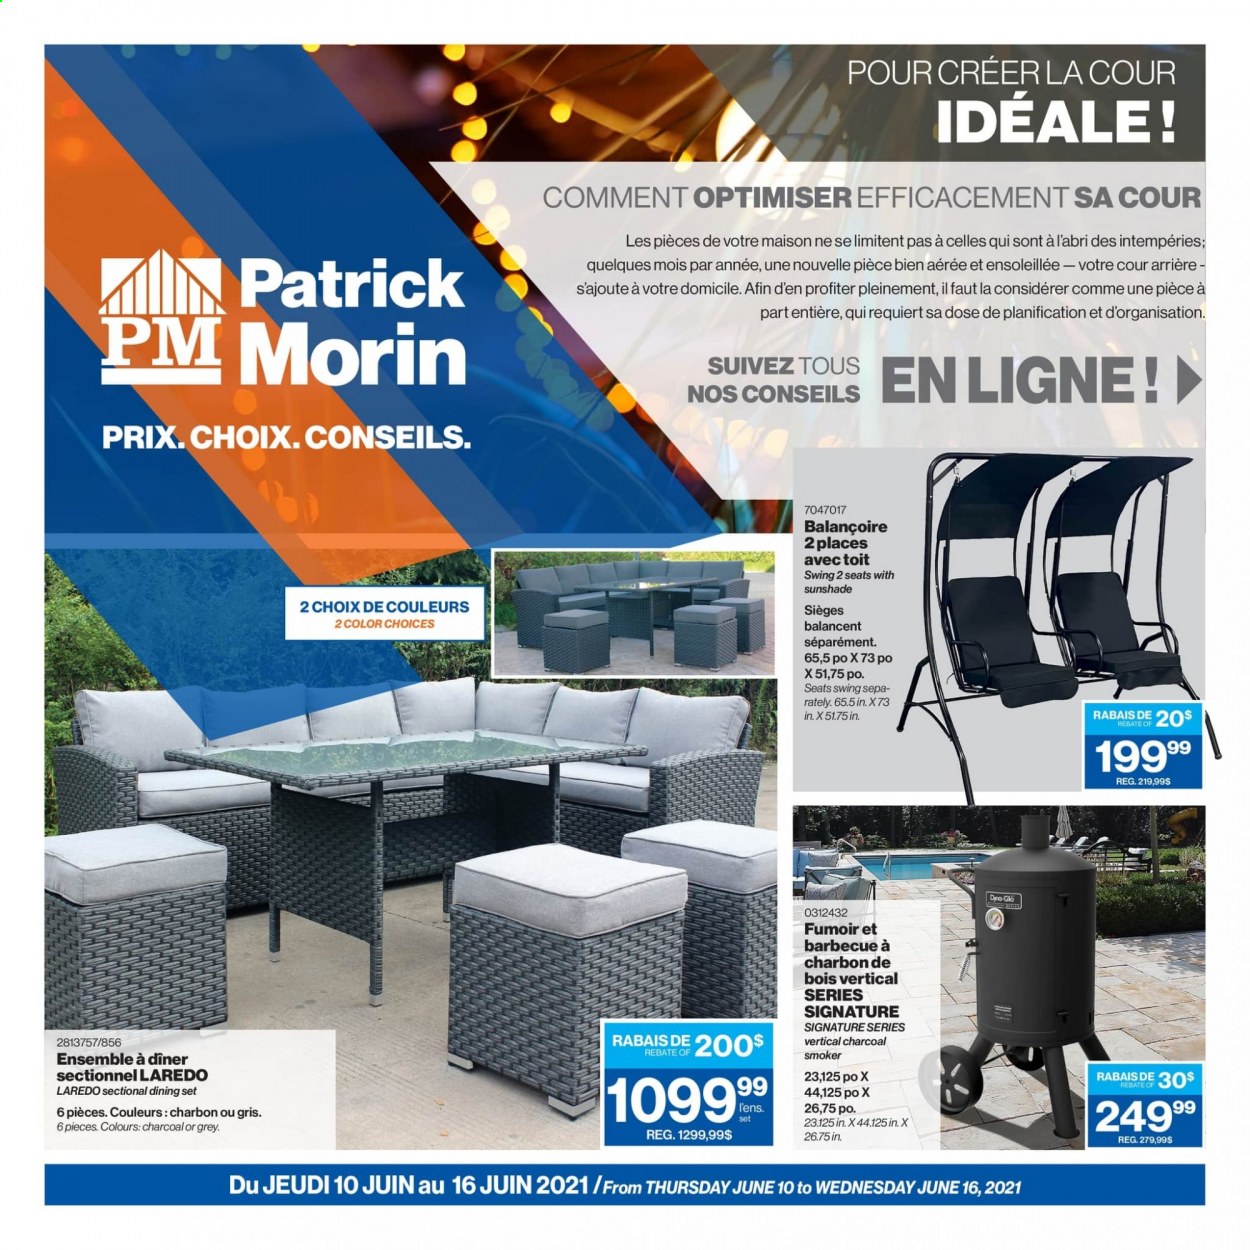 thumbnail - Patrick Morin Flyer - June 10, 2021 - June 16, 2021 - Sales products - dining set, charcoal, smoker, charcoal smoker. Page 1.